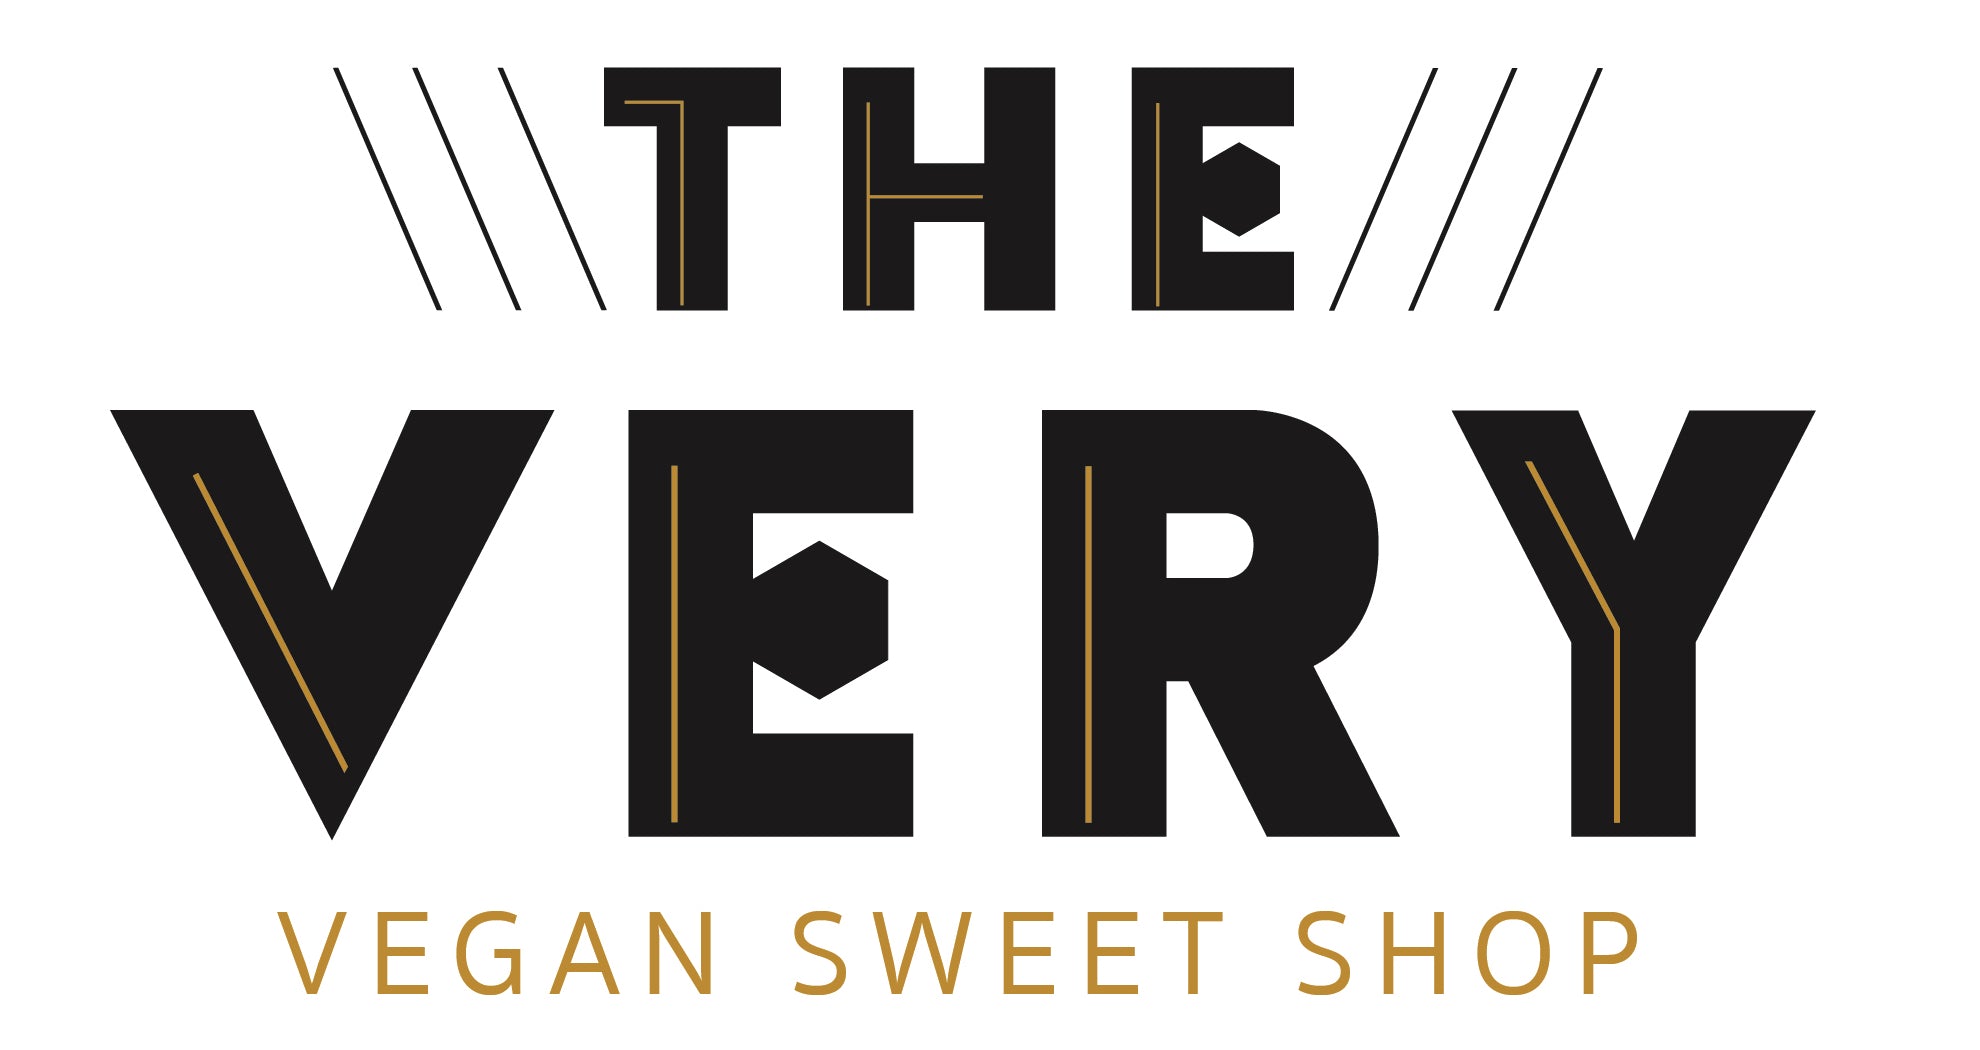 The Very Vegan Sweet Shop